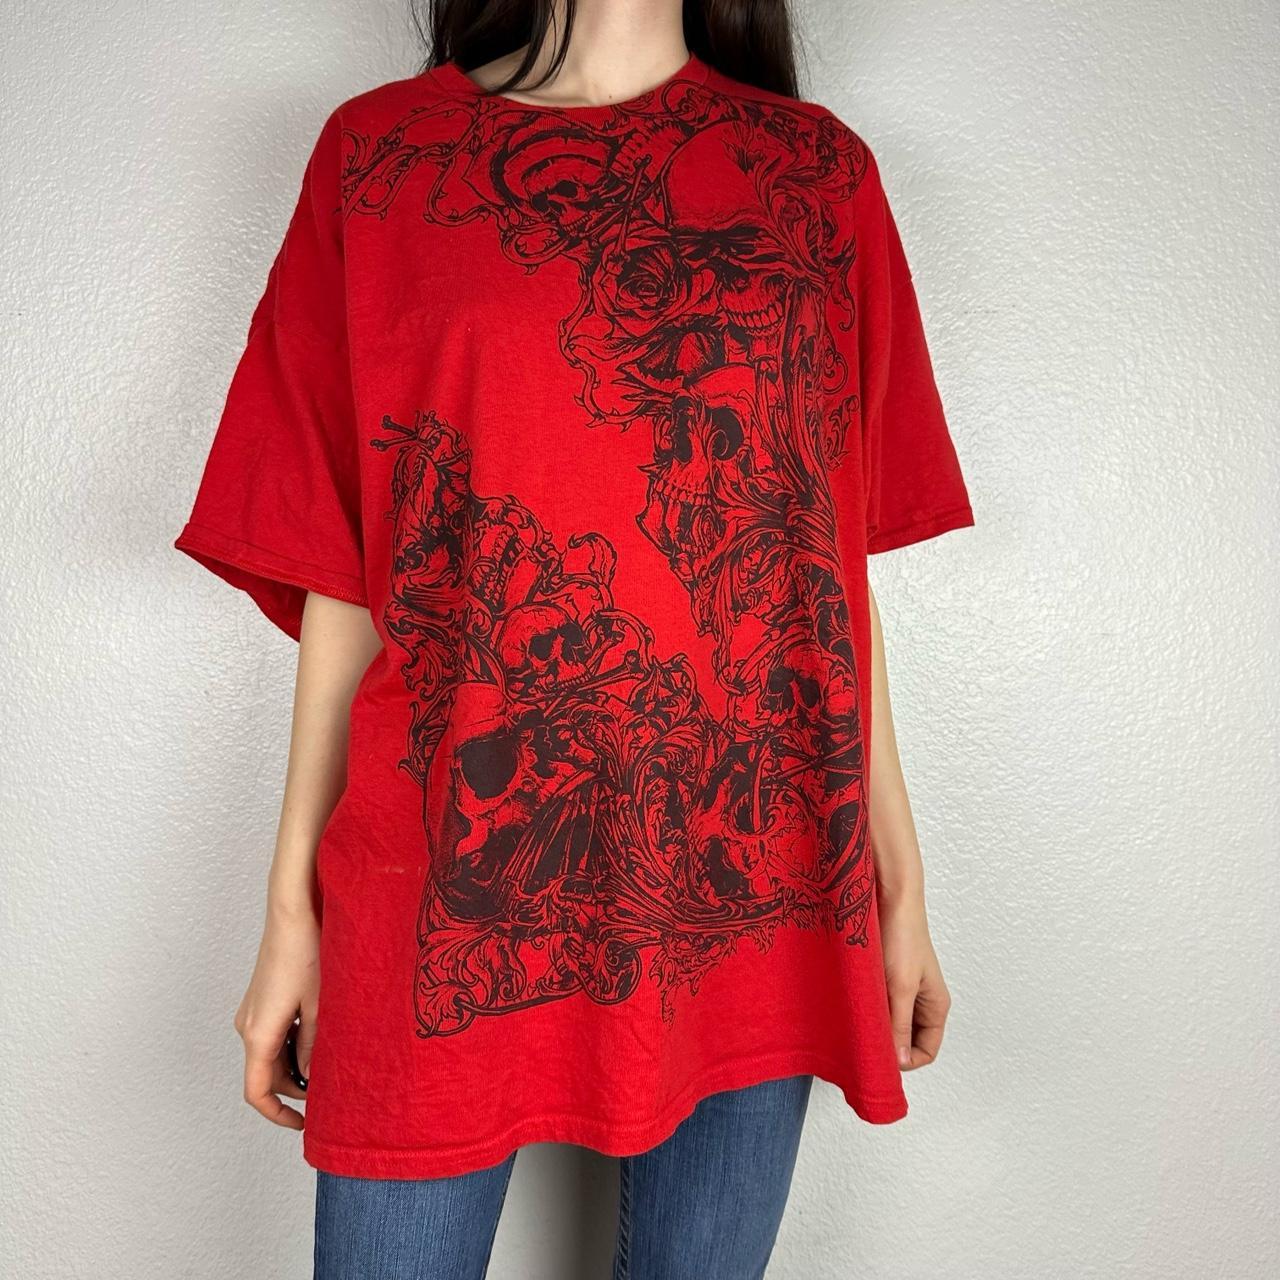 Red vintage y2k mall goth skull t-shirt Fits like... - Depop